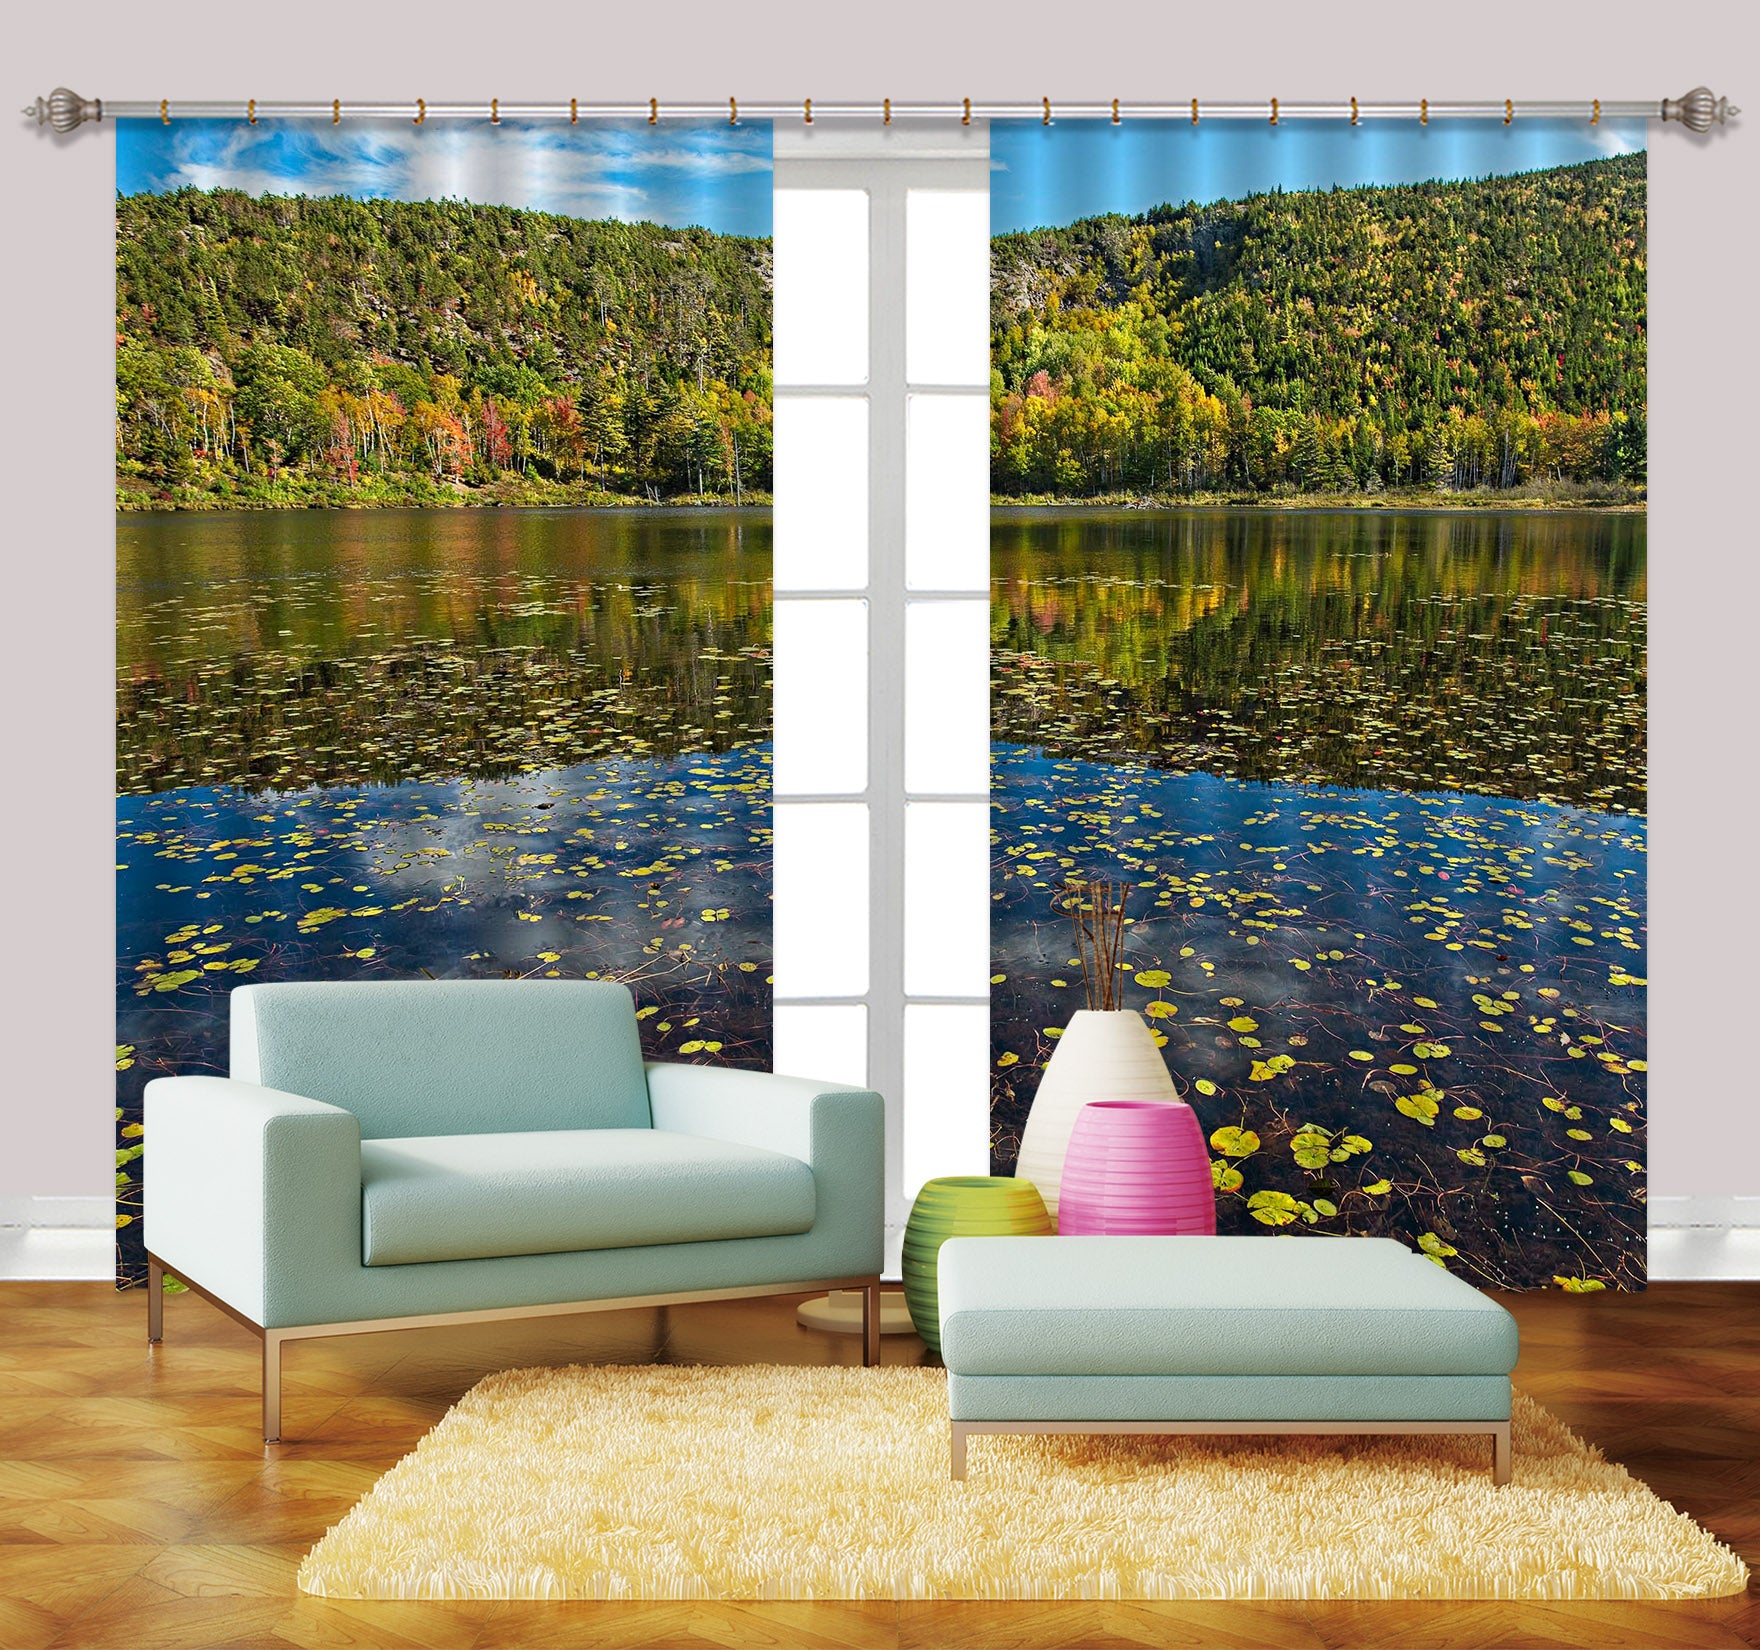 3D Lake Mountain 61229 Kathy Barefield Curtain Curtains Drapes